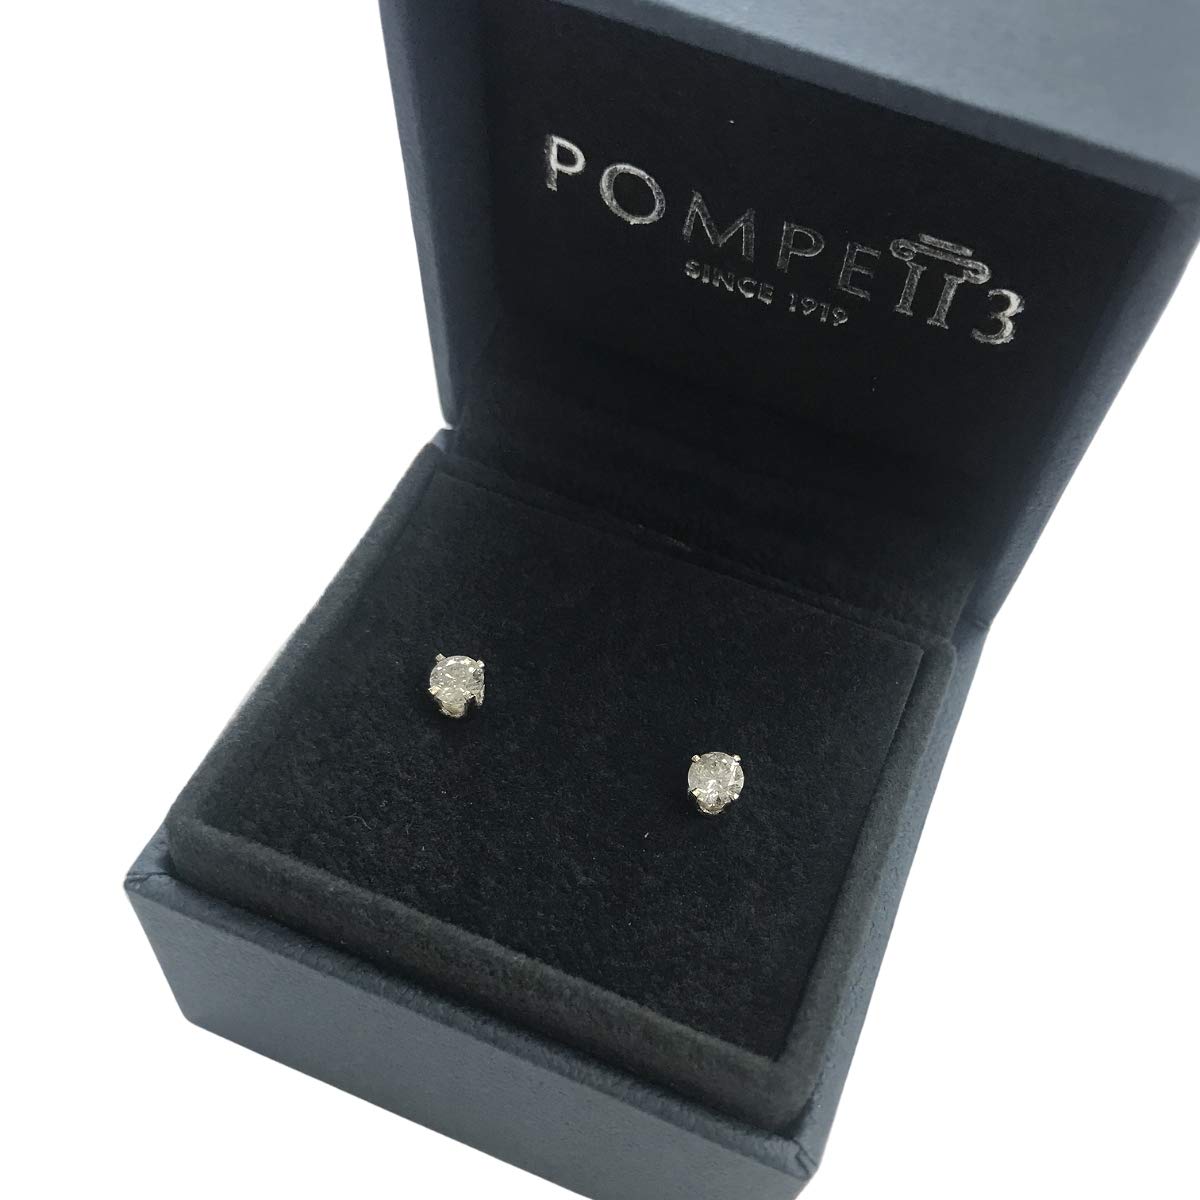 1/2Ct Round Brilliant Cut Diamond Certified Stud Earrings in 14K Gold Setting